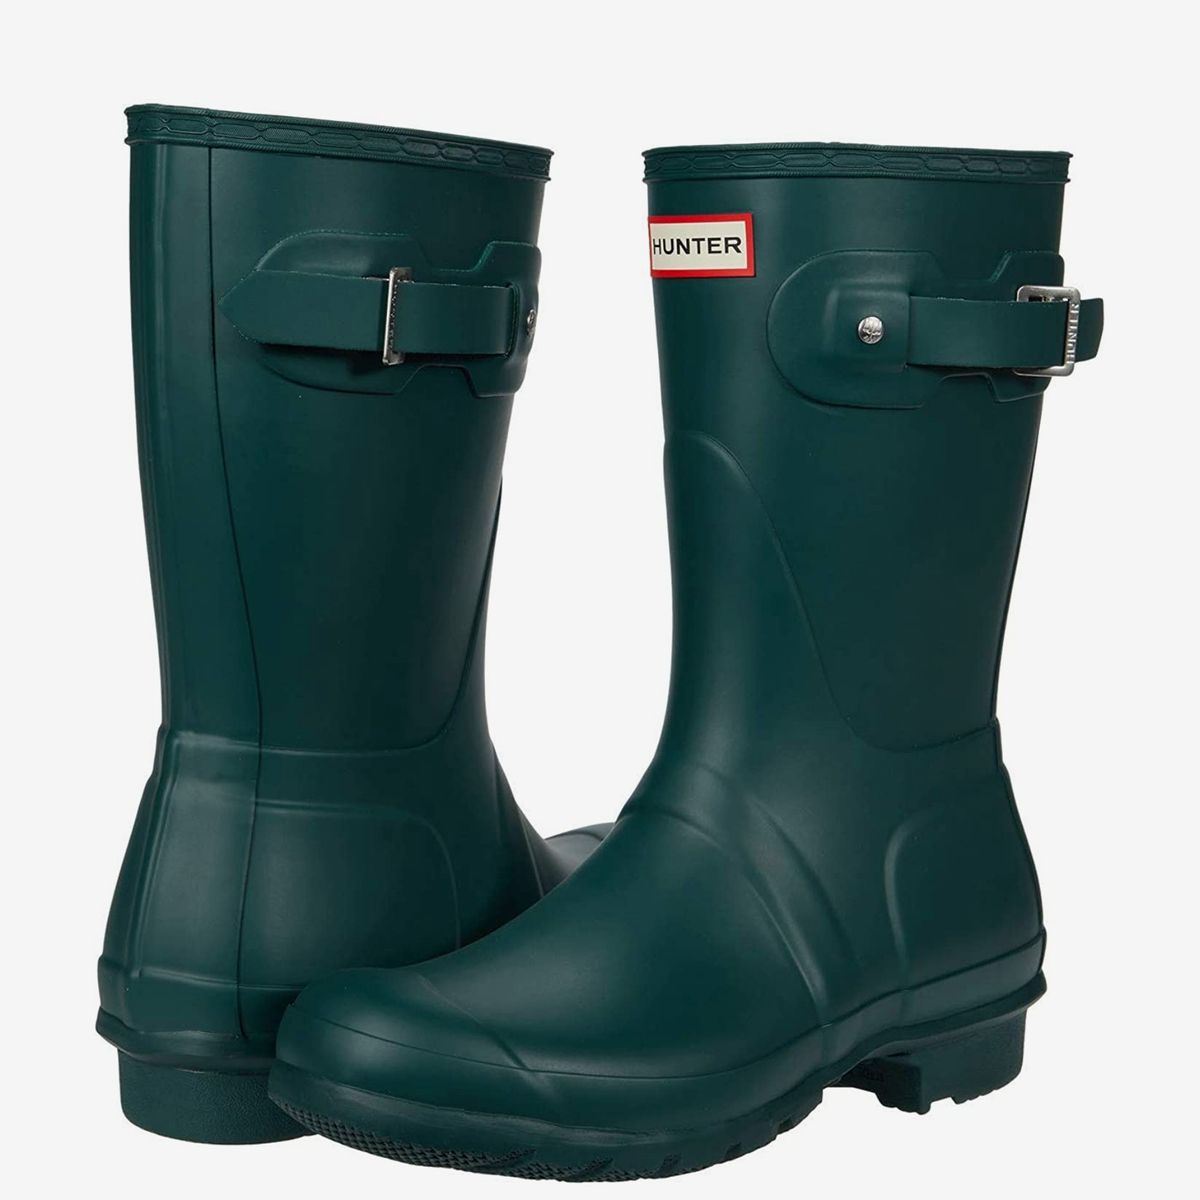 lightweight rain boots for travel